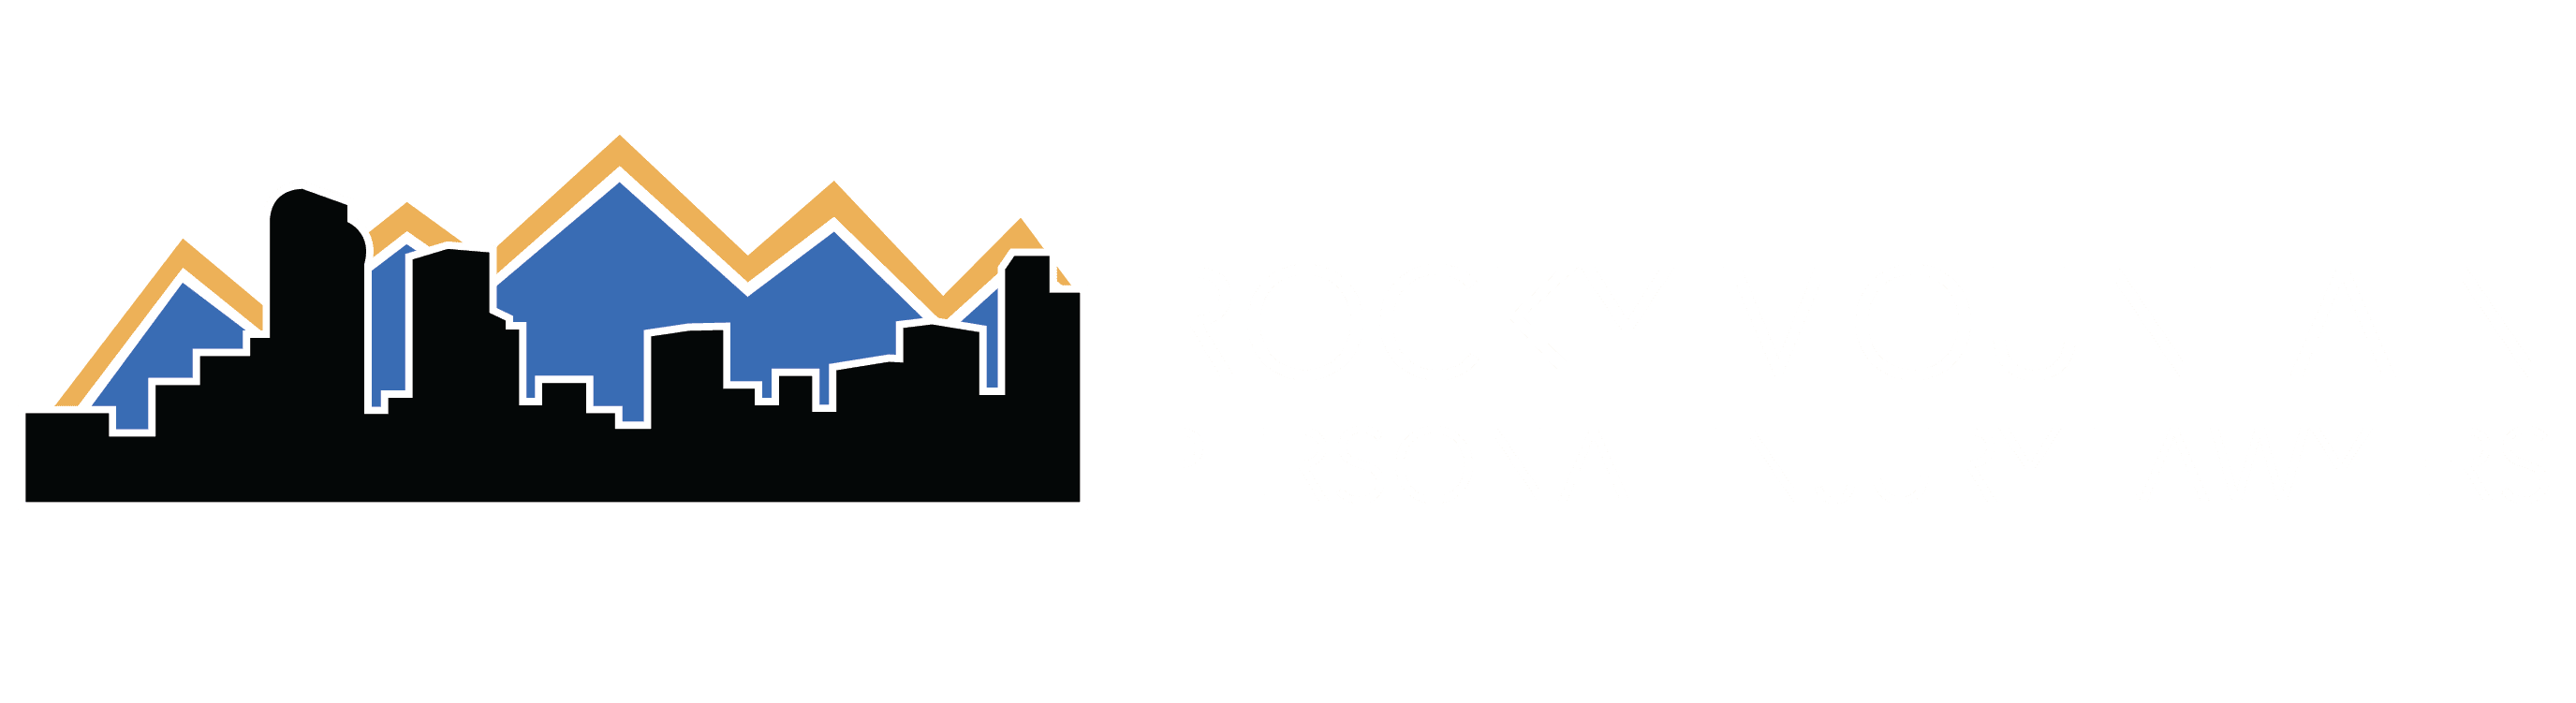 Rocky Mountain Personal Injury Lawyers